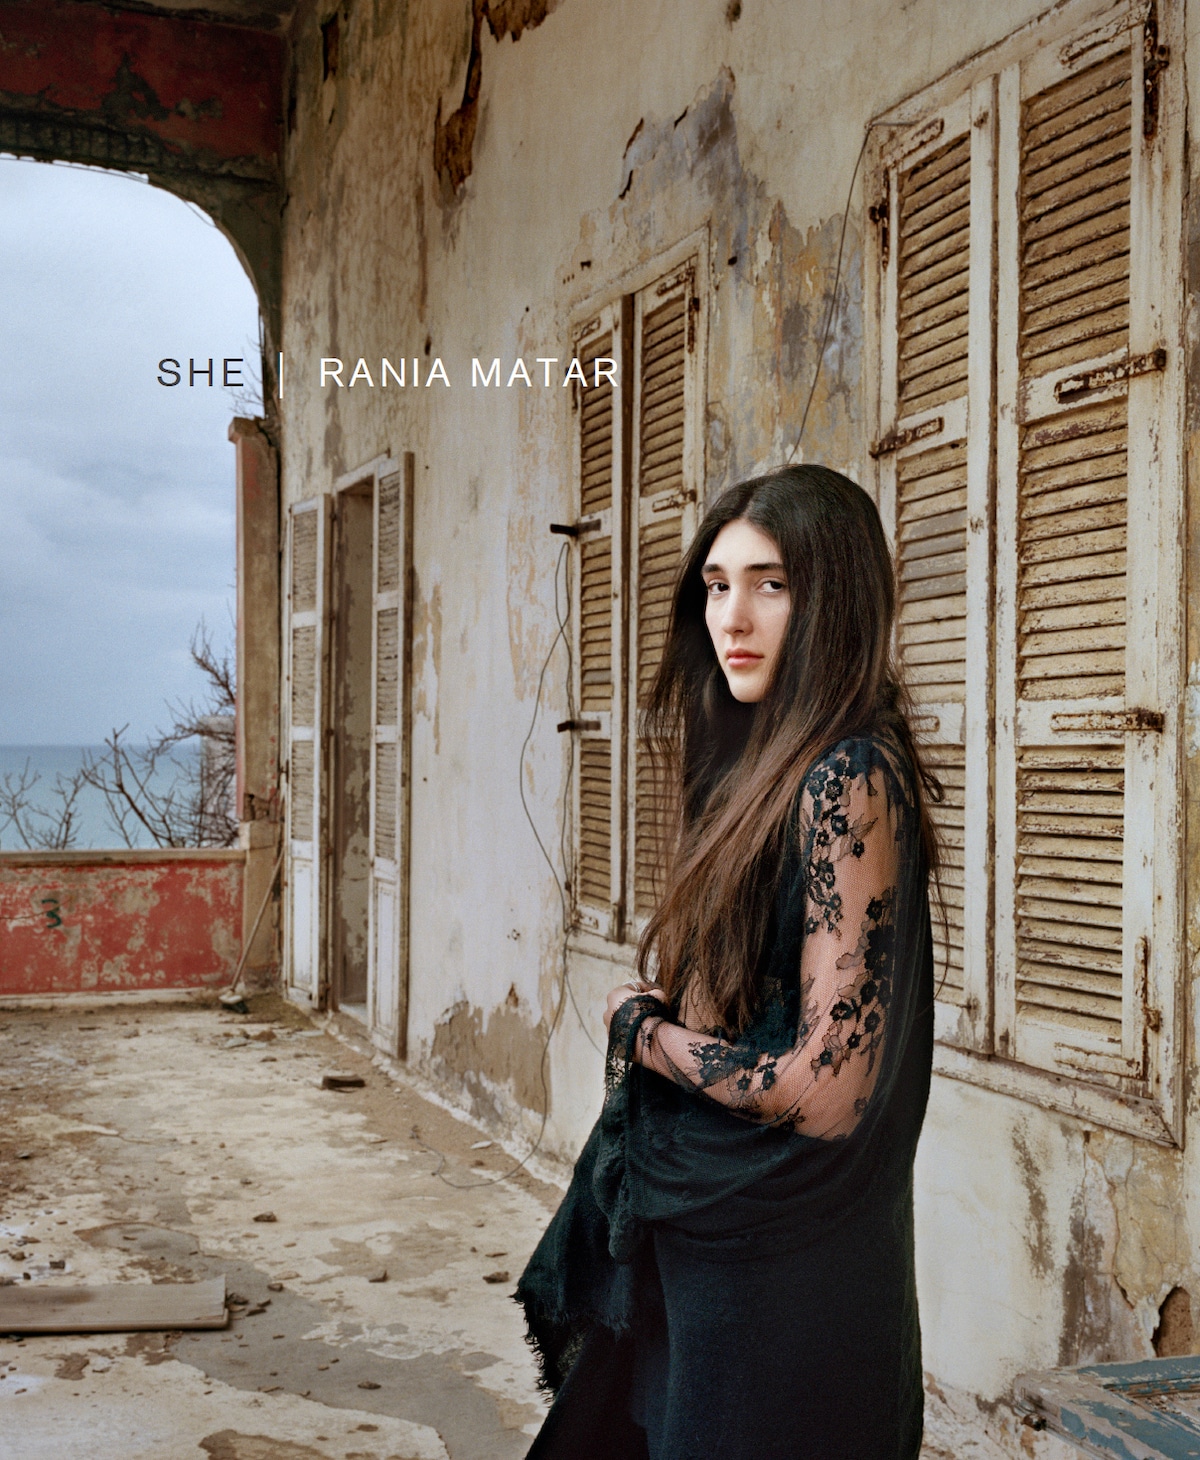 She by Rania Matar